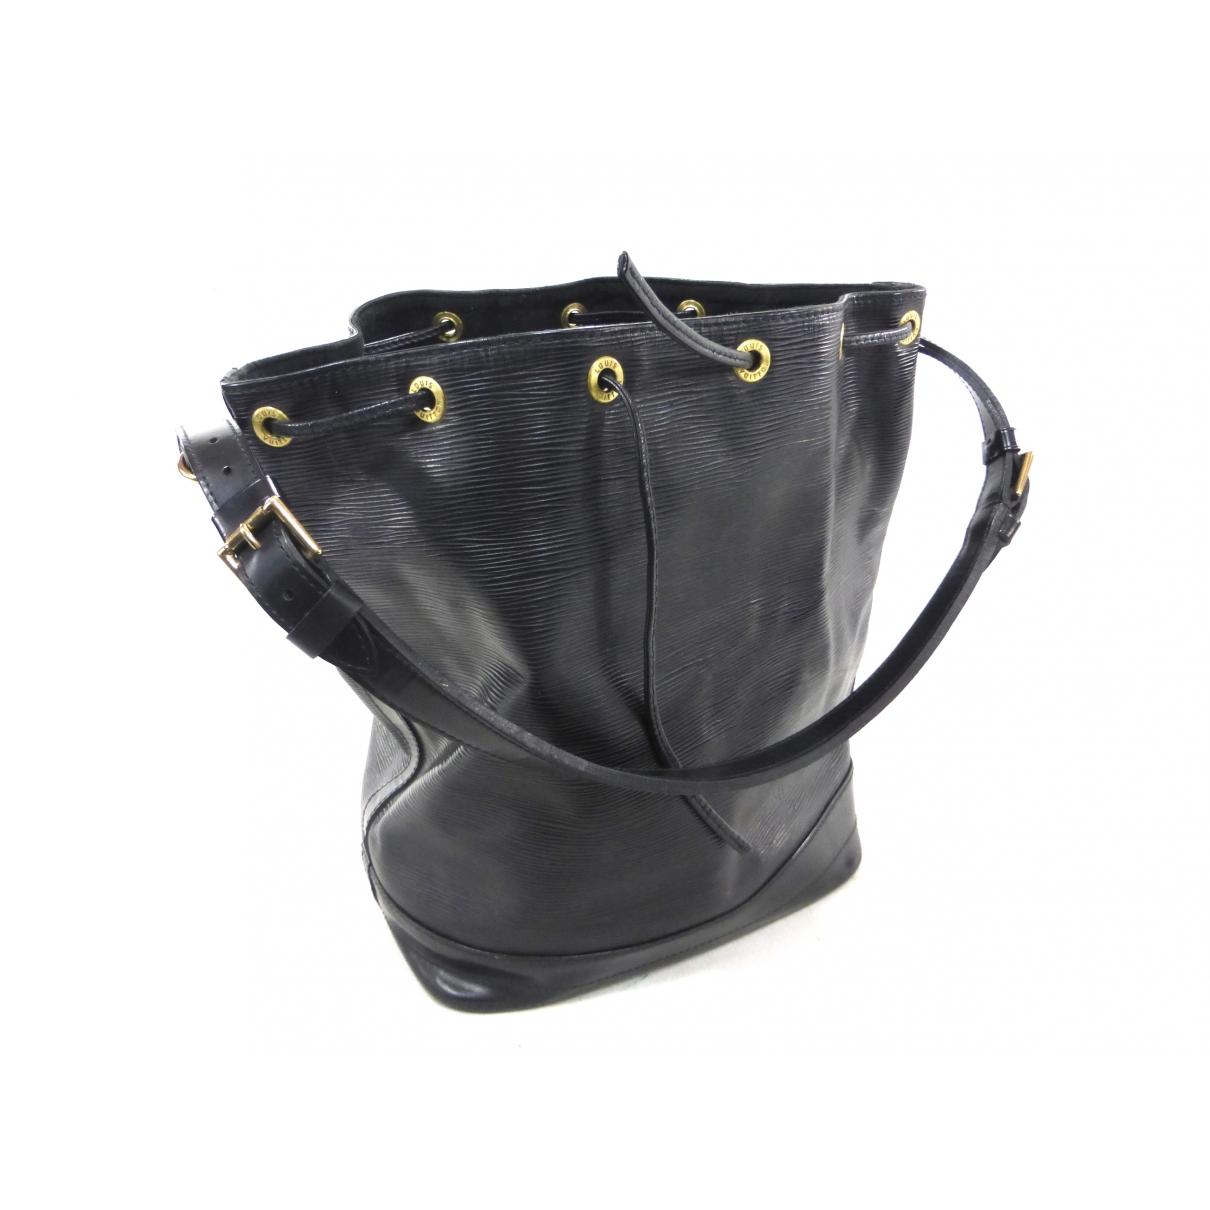 Lyst - Louis Vuitton Pre-owned Vintage Noé Black Leather Handbags in Black